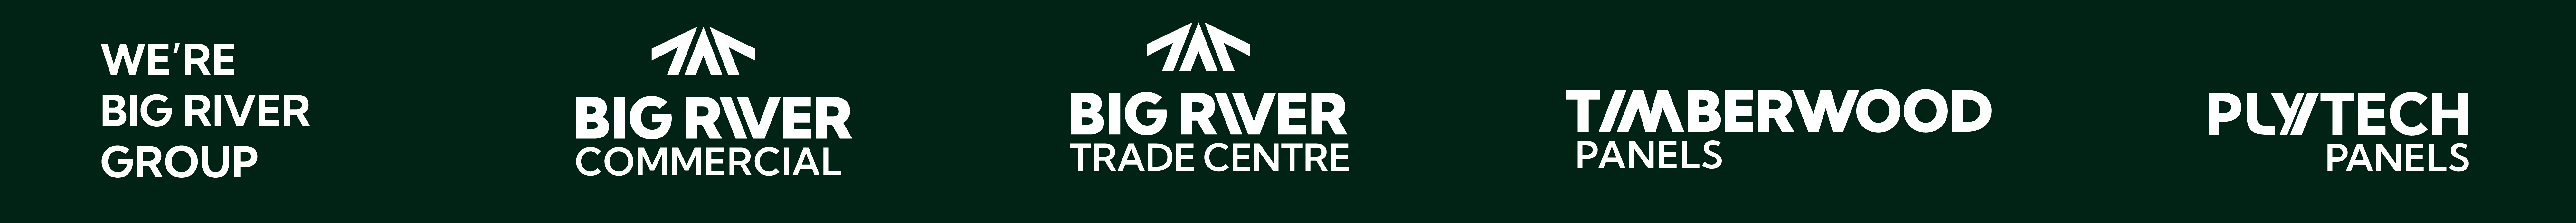 We're Big River Group, Big River Commercial, Big River Trade Centre, Timberwood Panels, Plytech Panels